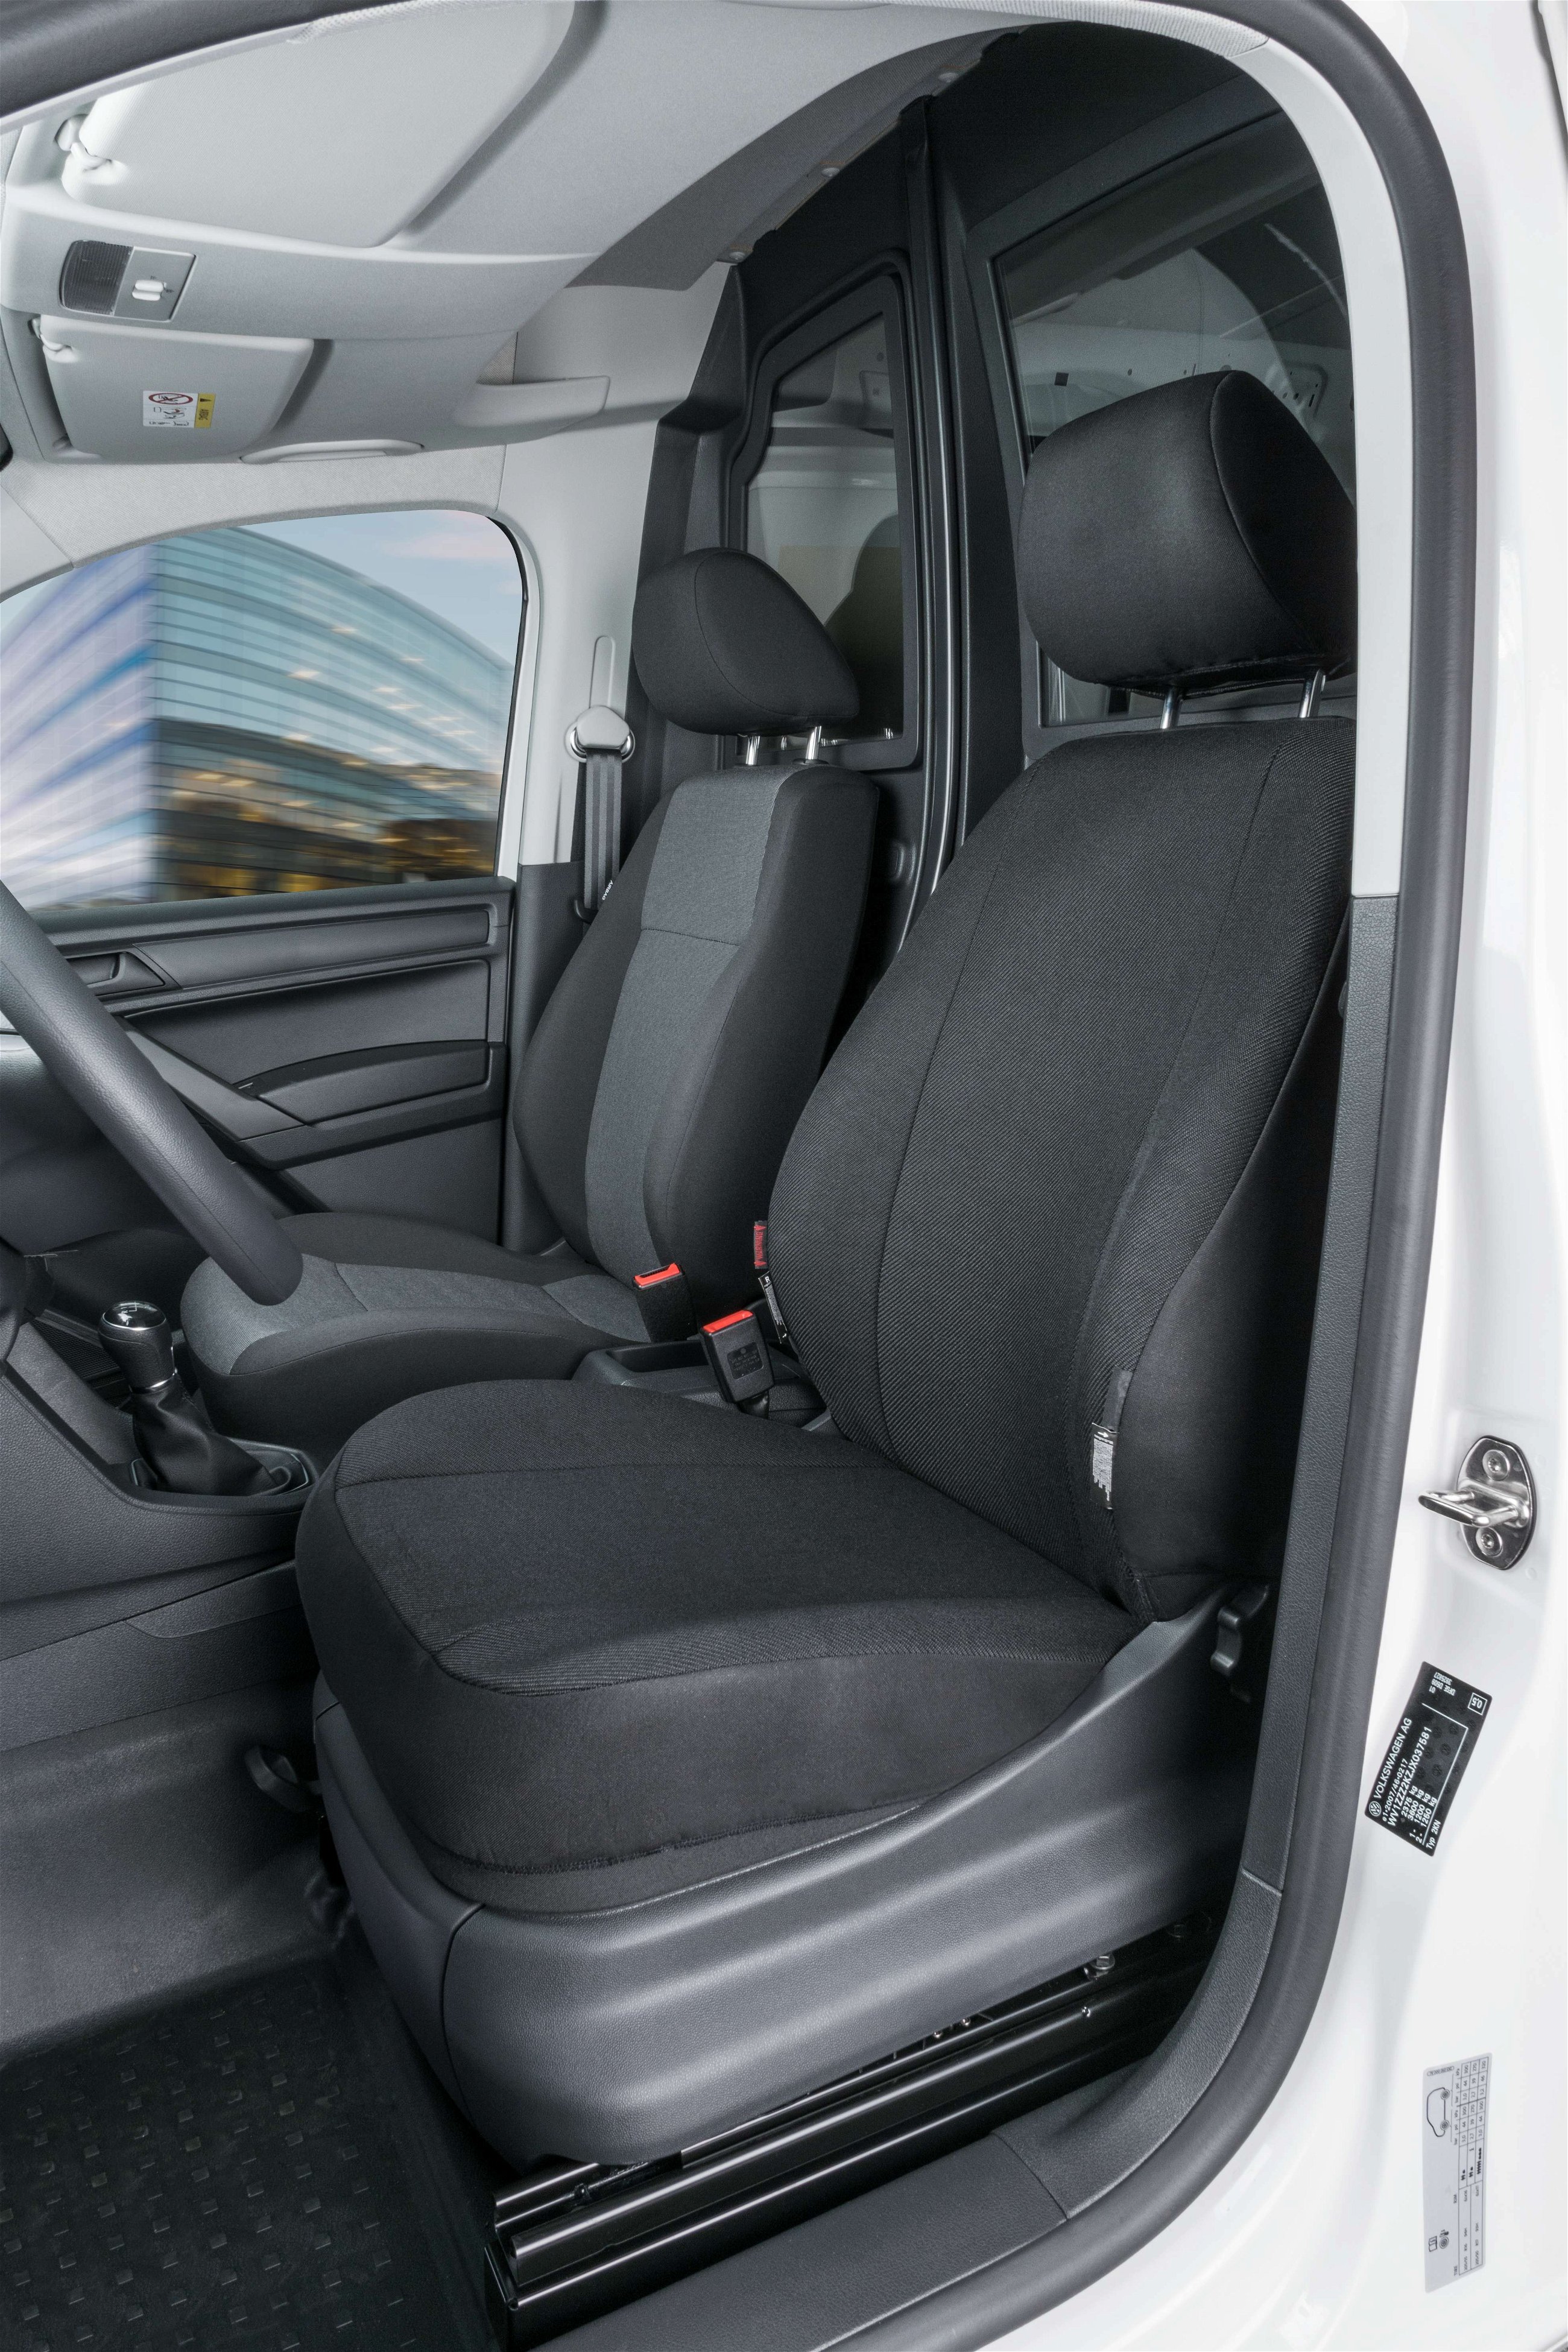 Housse de siège Transporter en tissu pour VW Caddy, siège avant simple